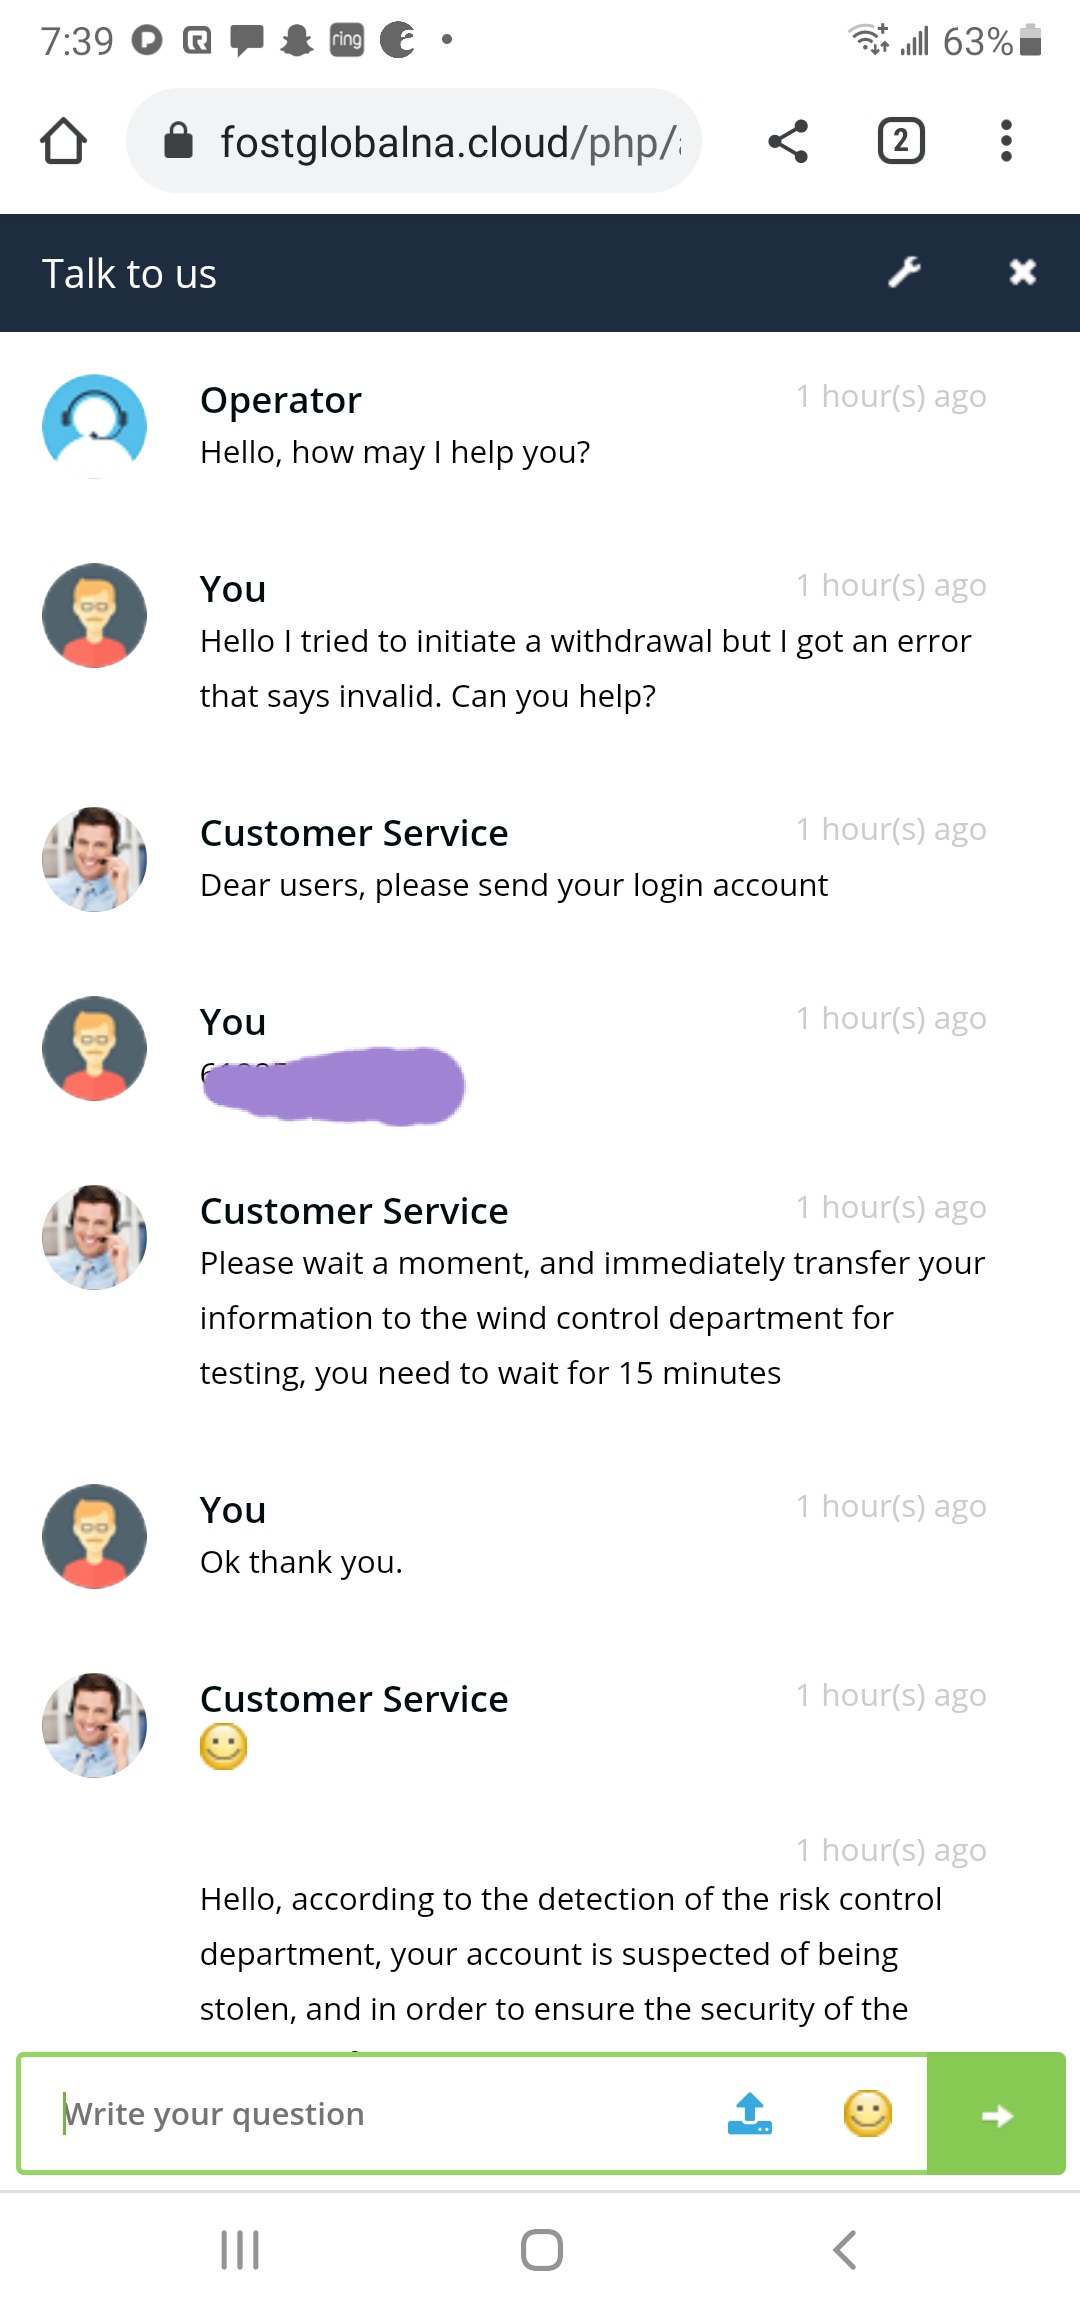 Dialogue customer service 1